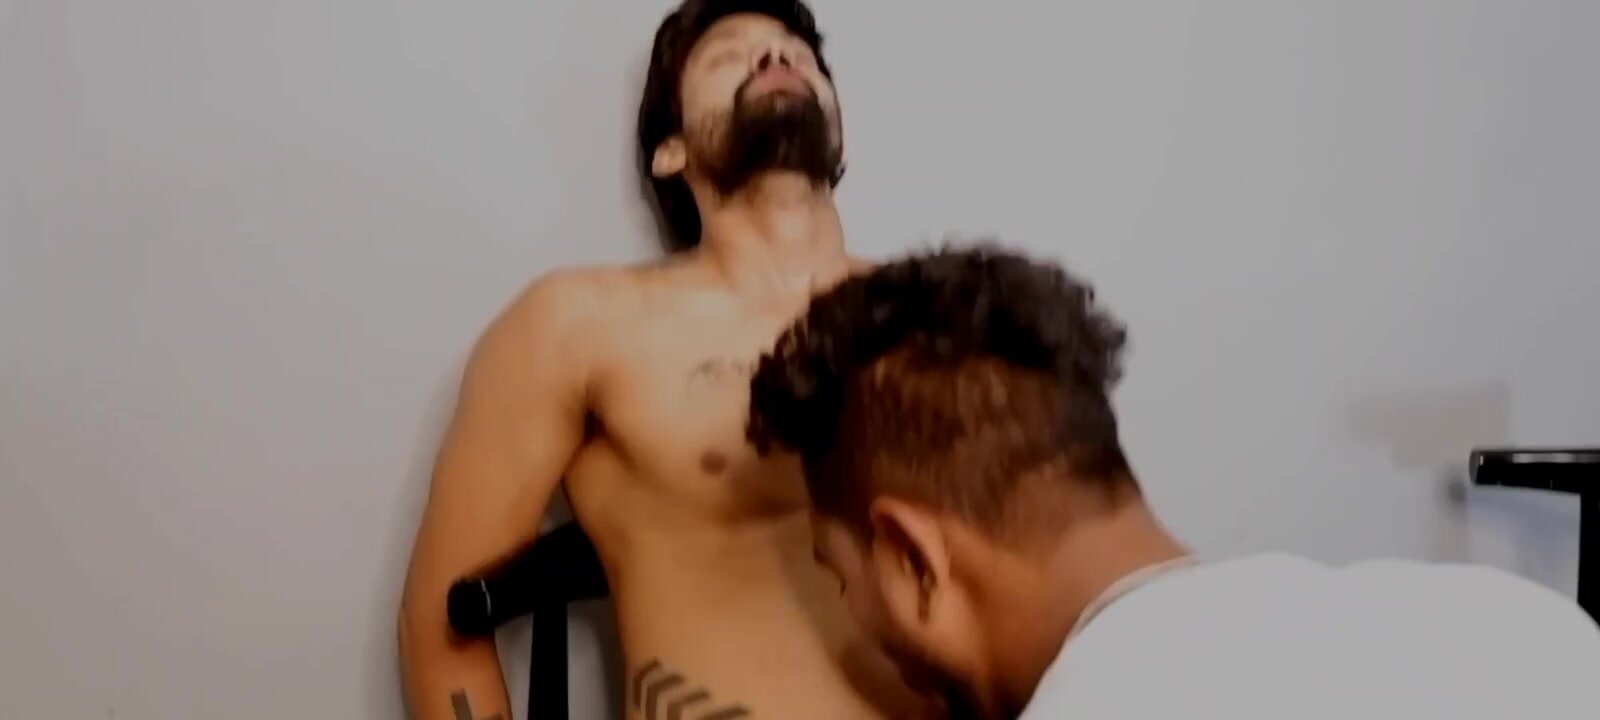 Indian gay fun with a hot teacher - ThisVid.com